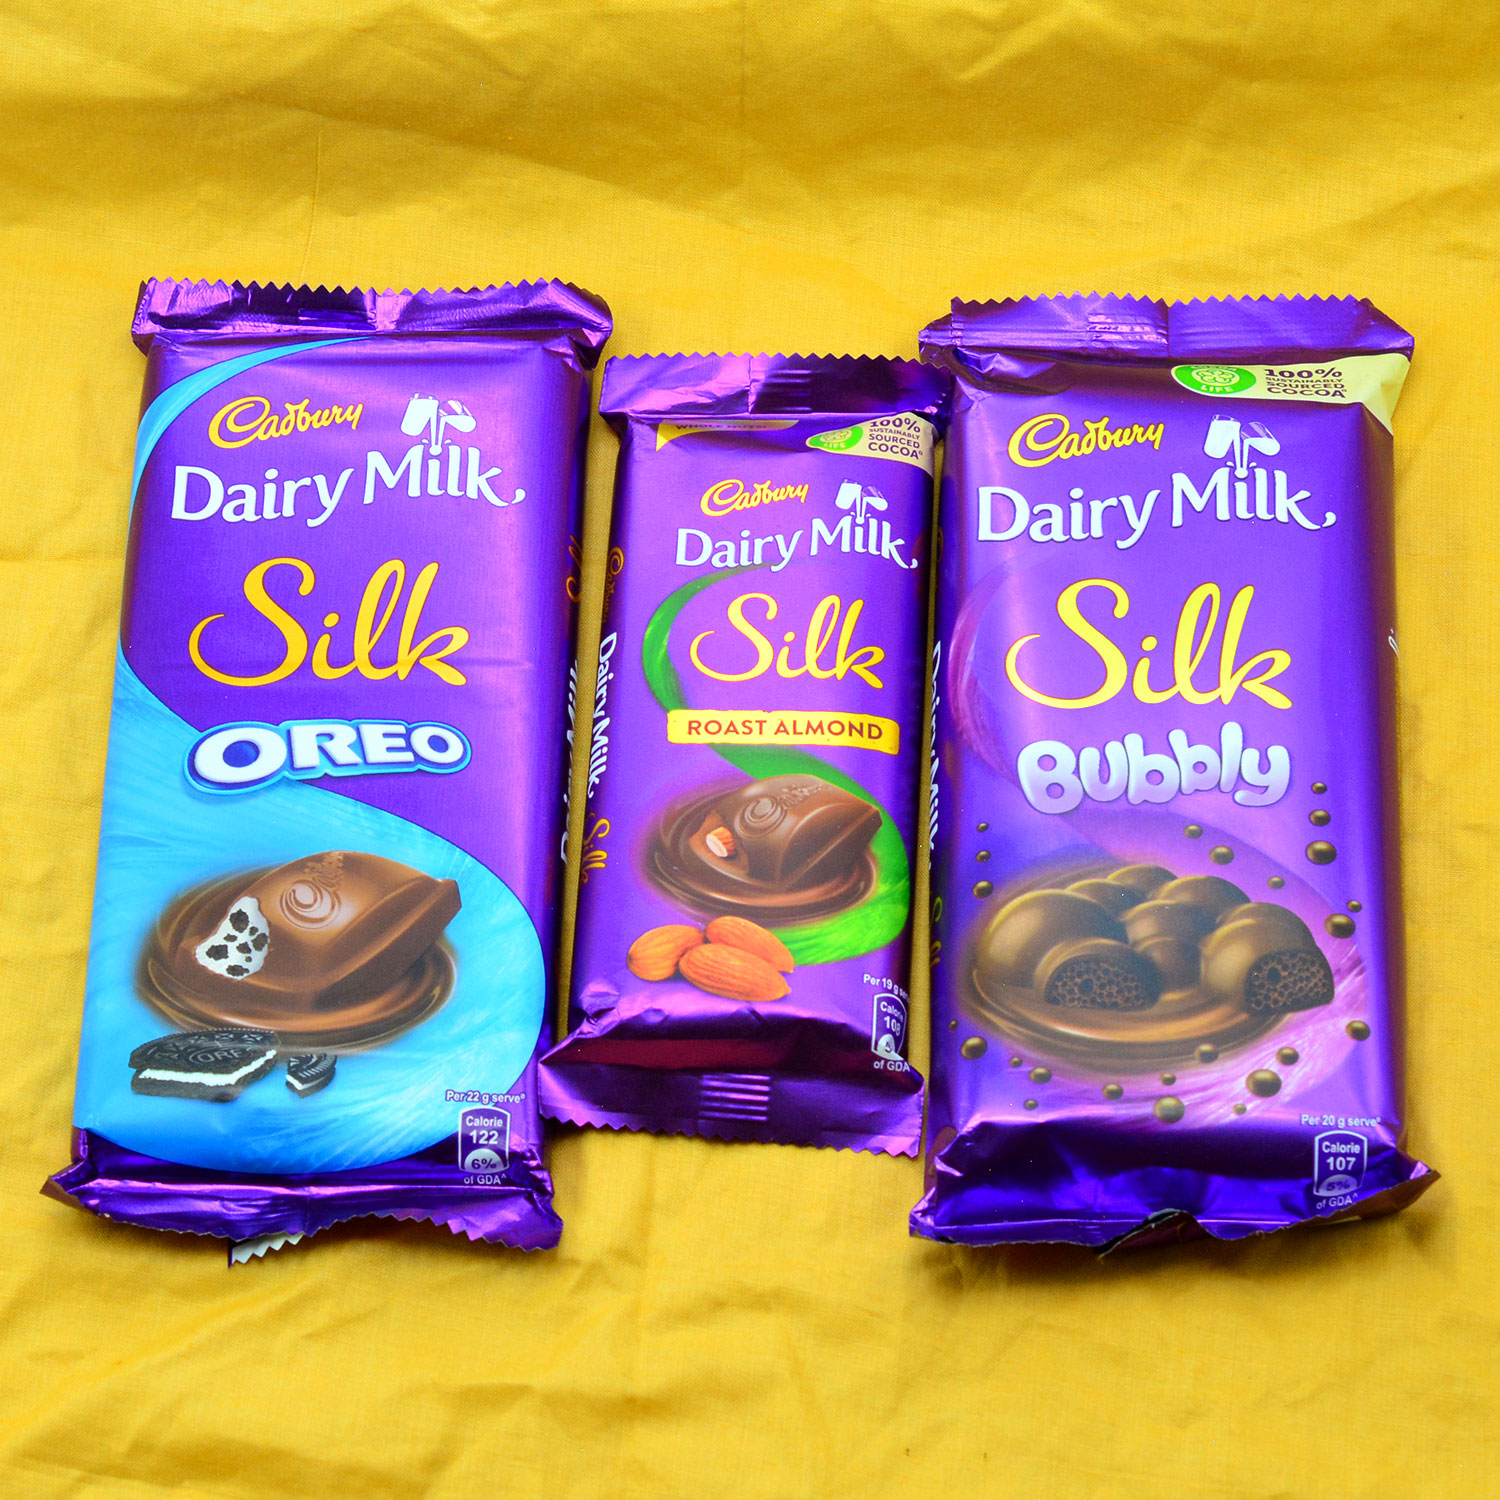 Pack of 3 Silk Special Cadbury Chocolates